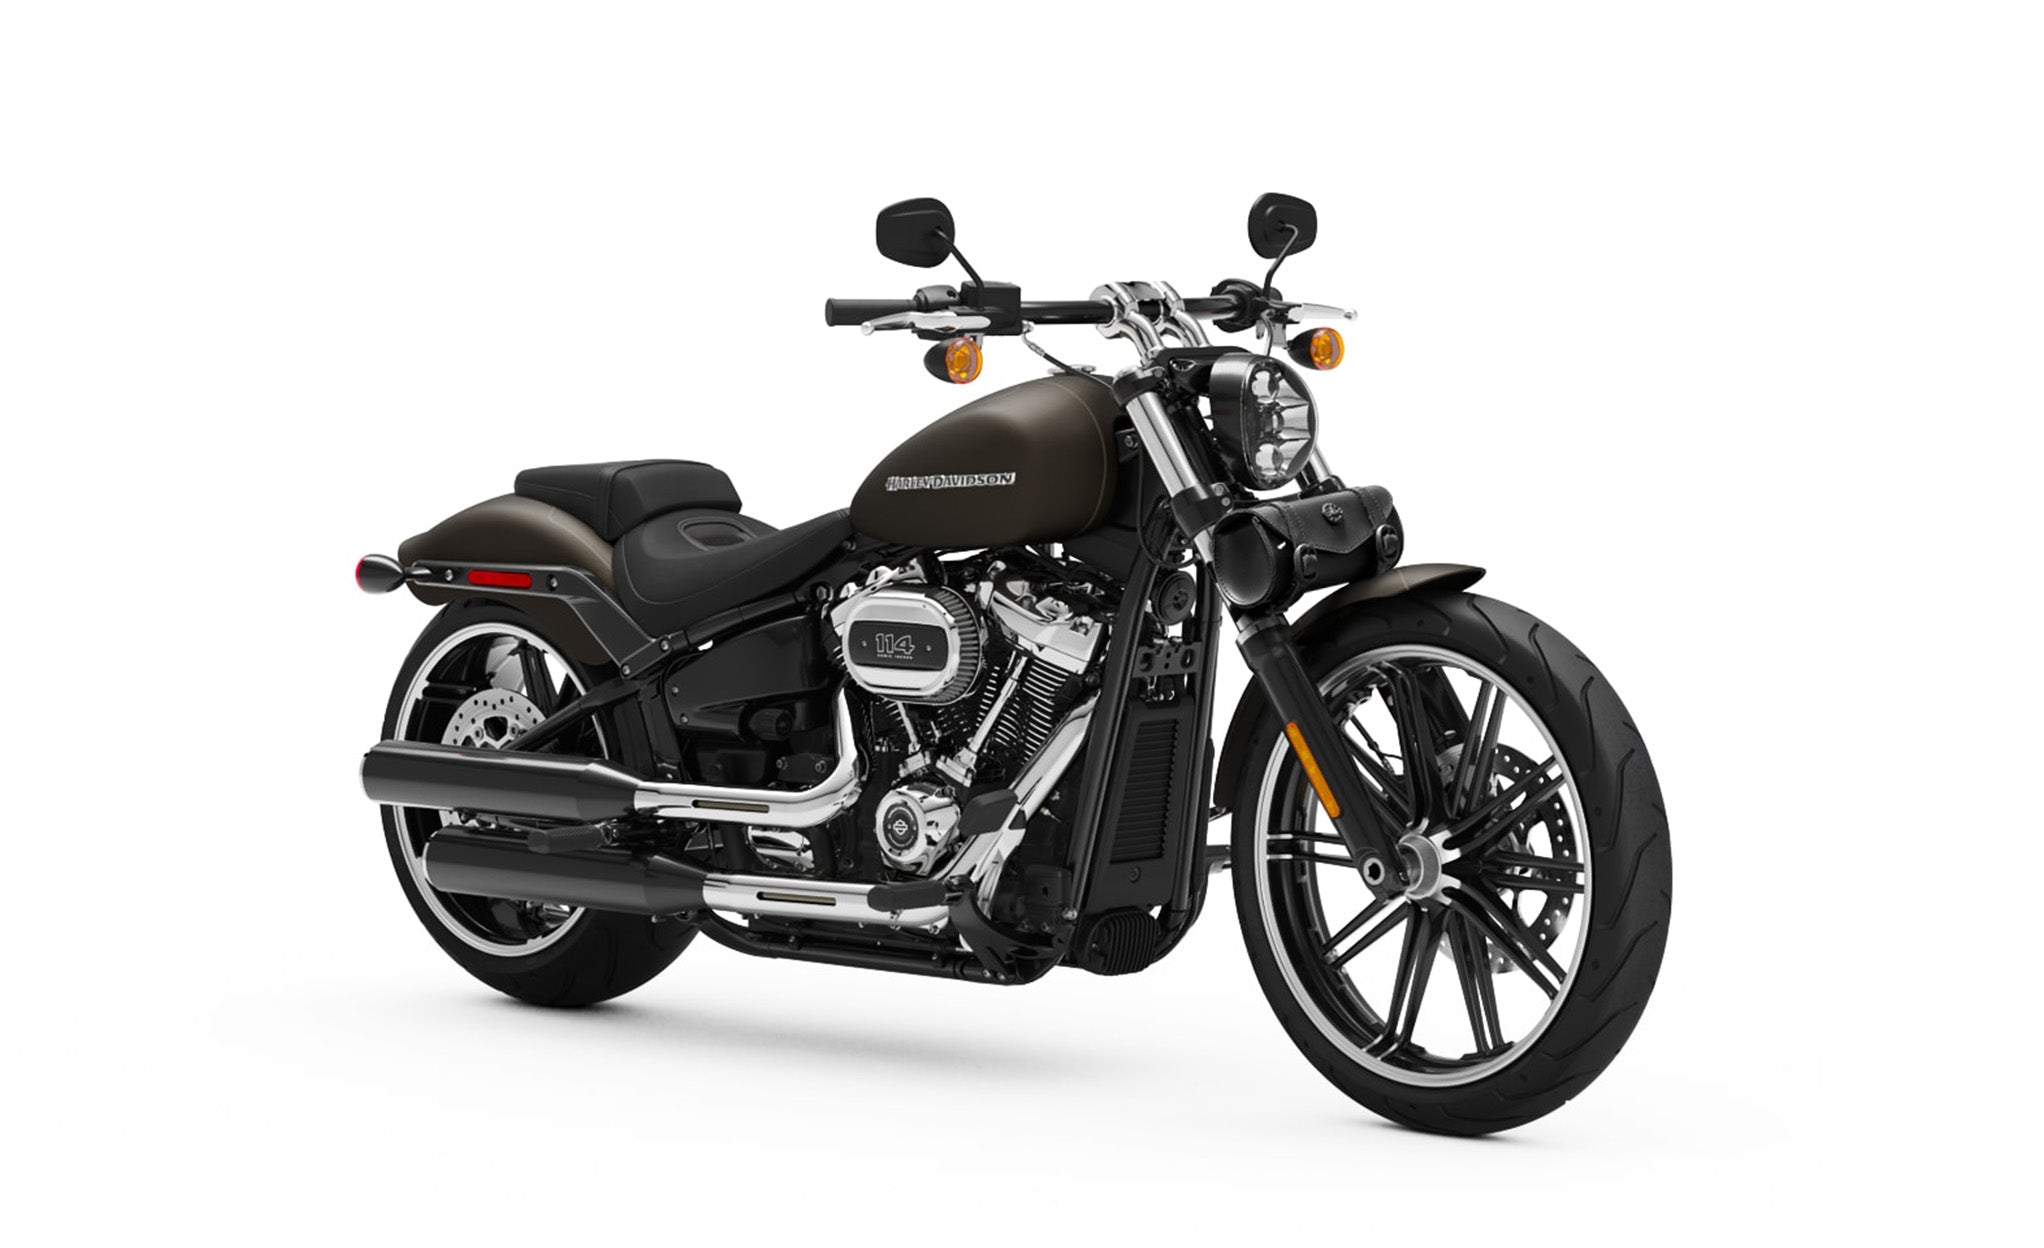 Viking Dark Age Plain Leather Motorcycle Handlebar Bag for Harley Davidson Bag on Bike View @expand